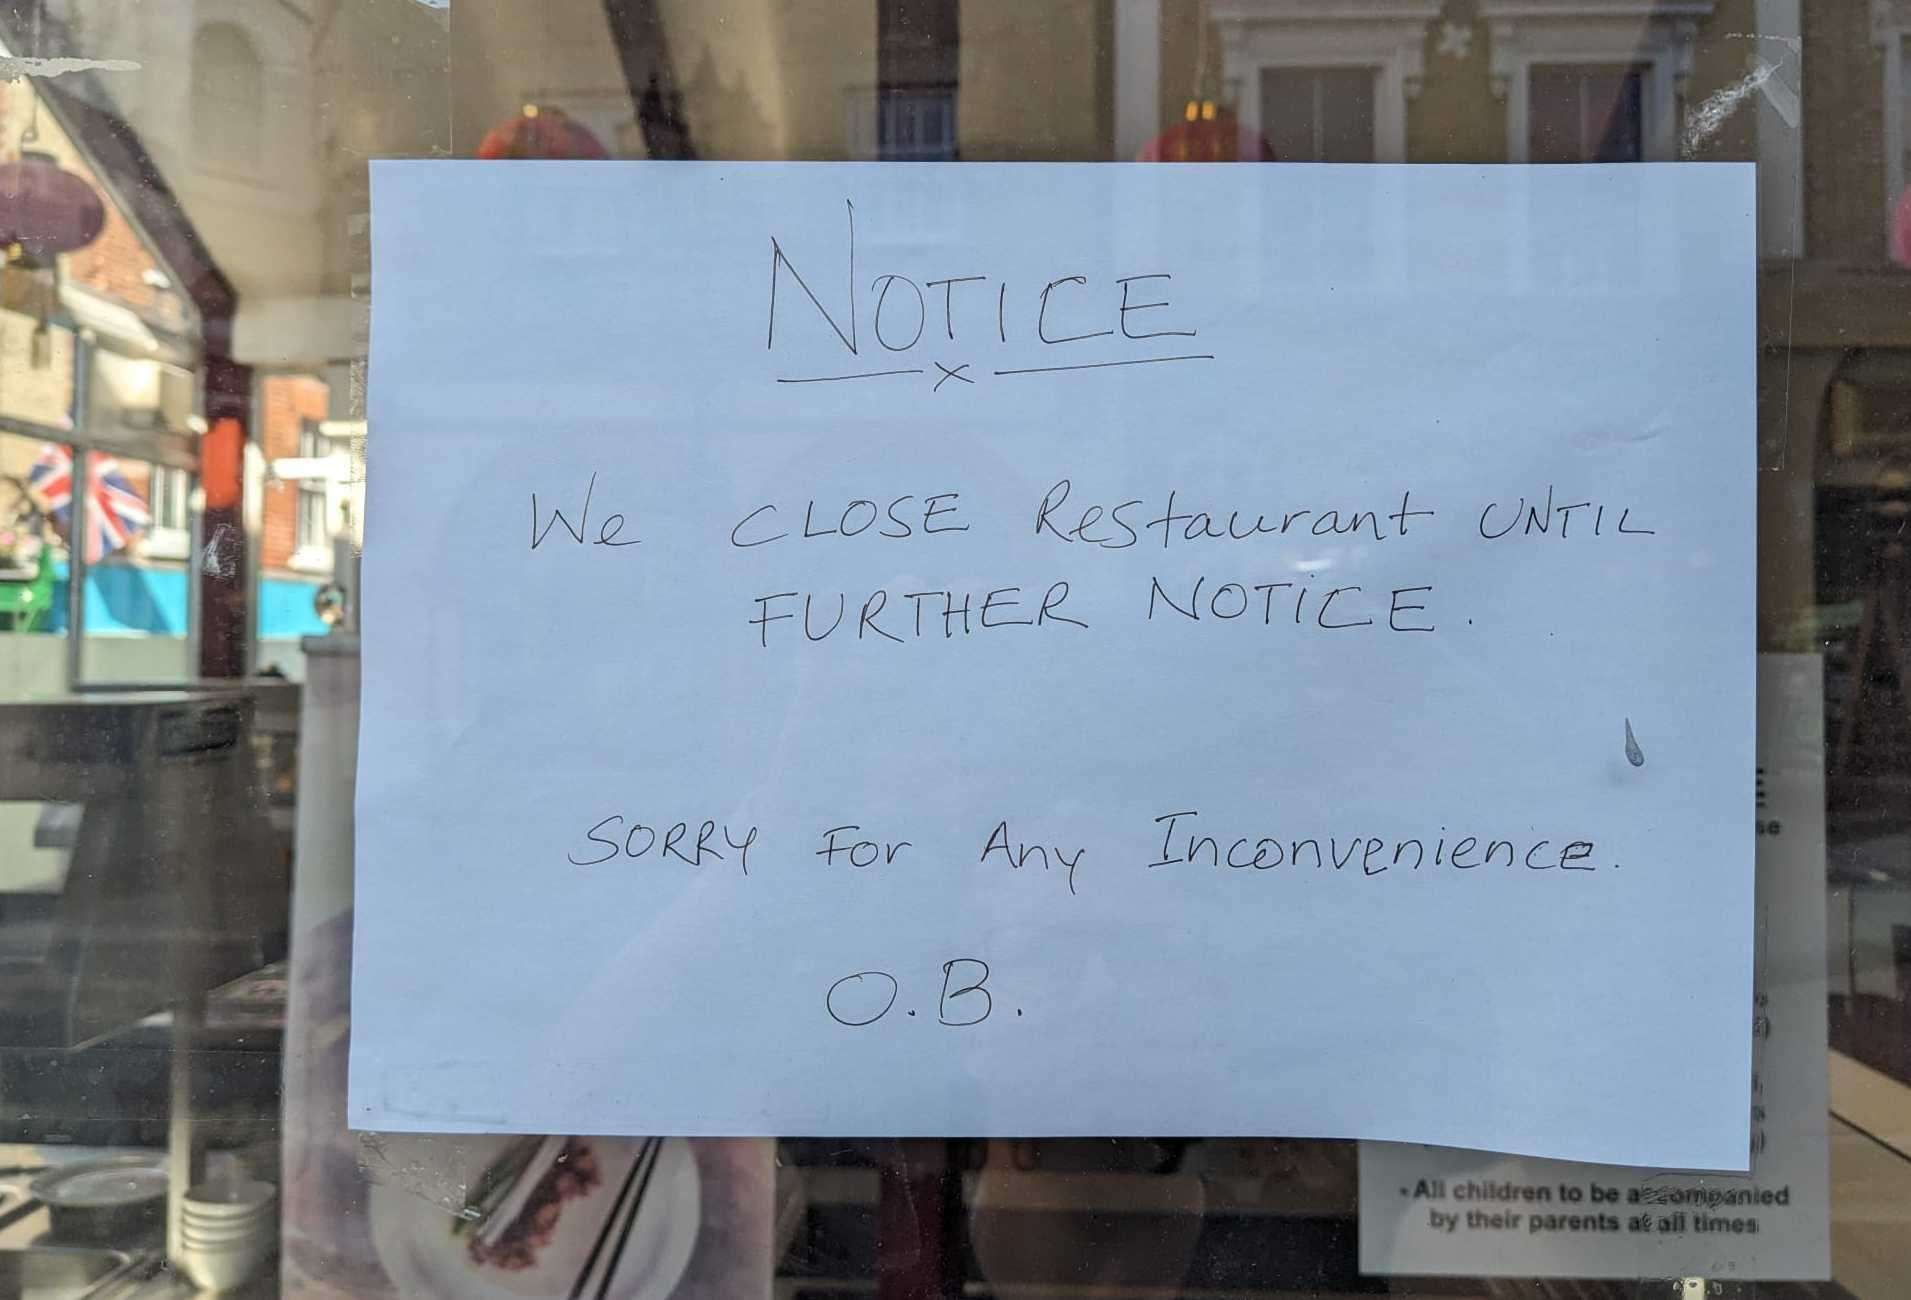 The Oriental Buffet in Folkestone closed without warning last June